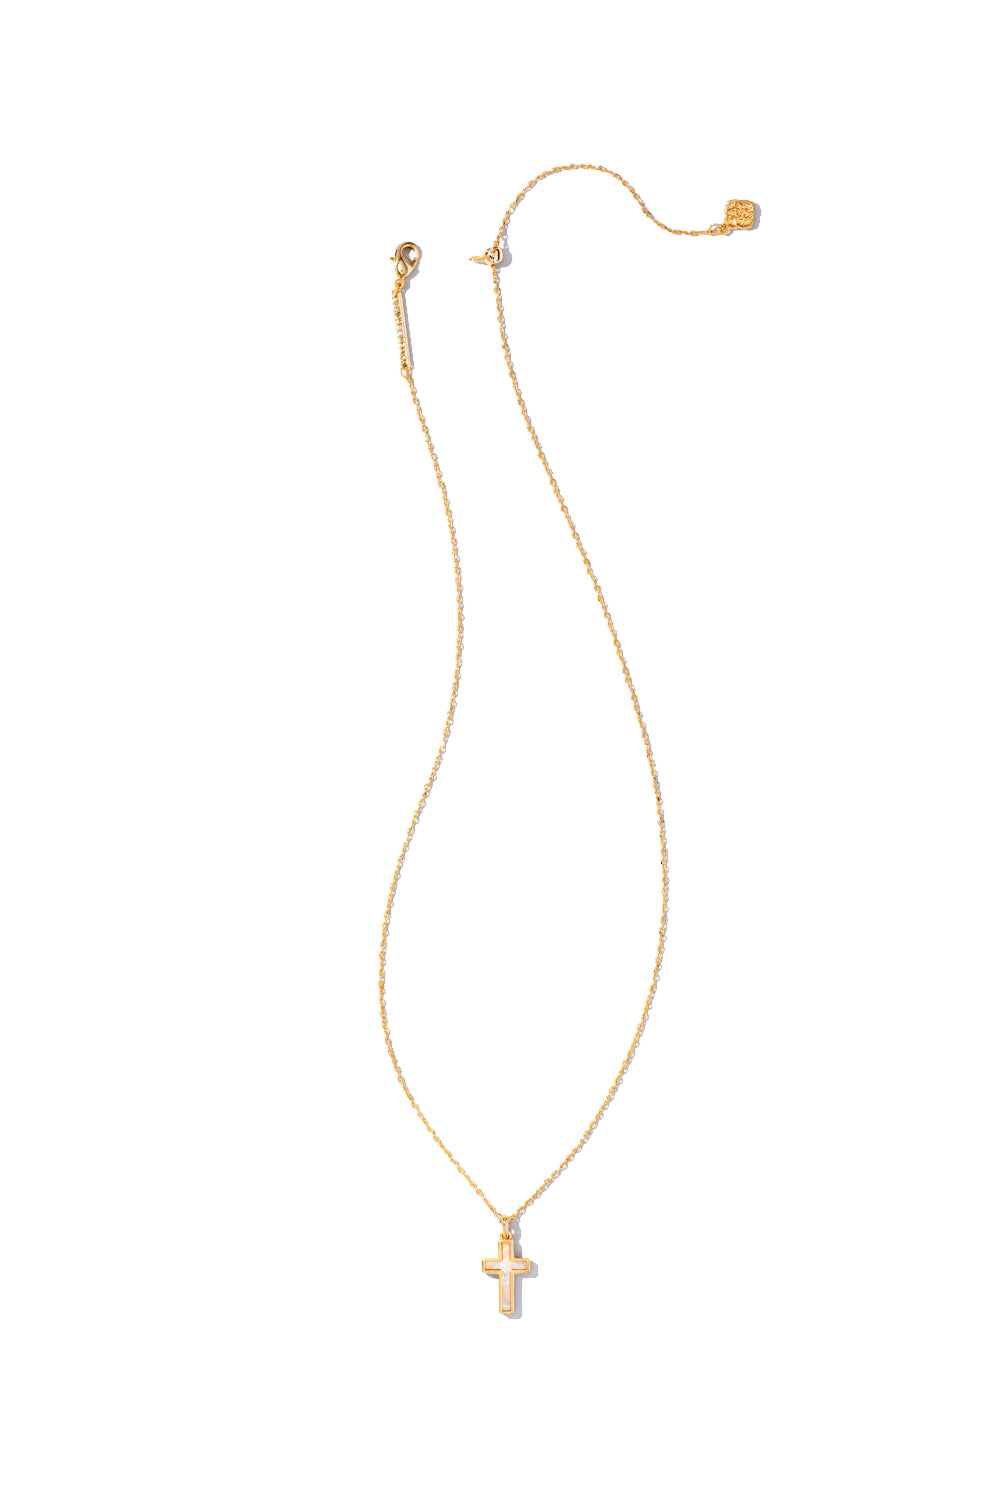 Davis Cross Charm Necklace in 18k Yellow Gold Vermeil | Kendra Scott